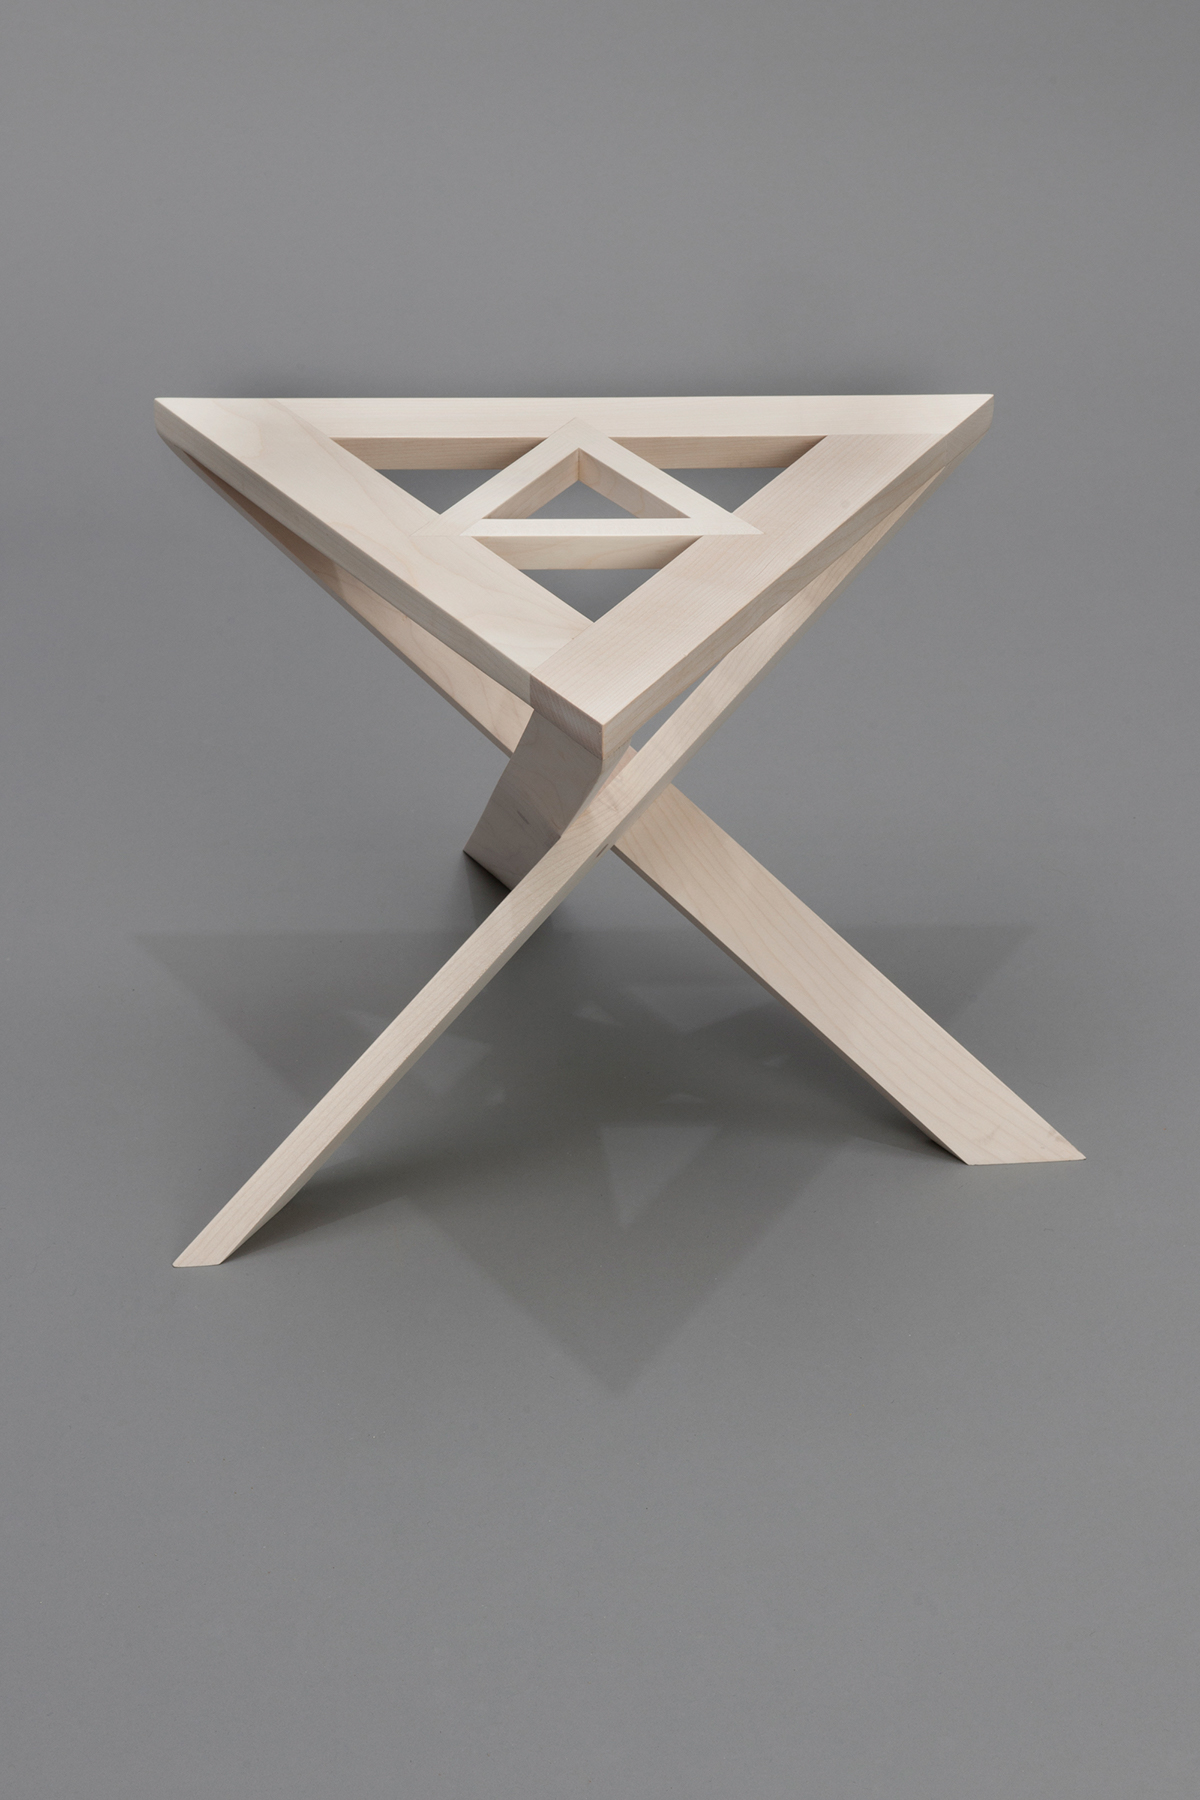 stool triangle furniture maple wood woodworking rit DIS denmark Scandinavia